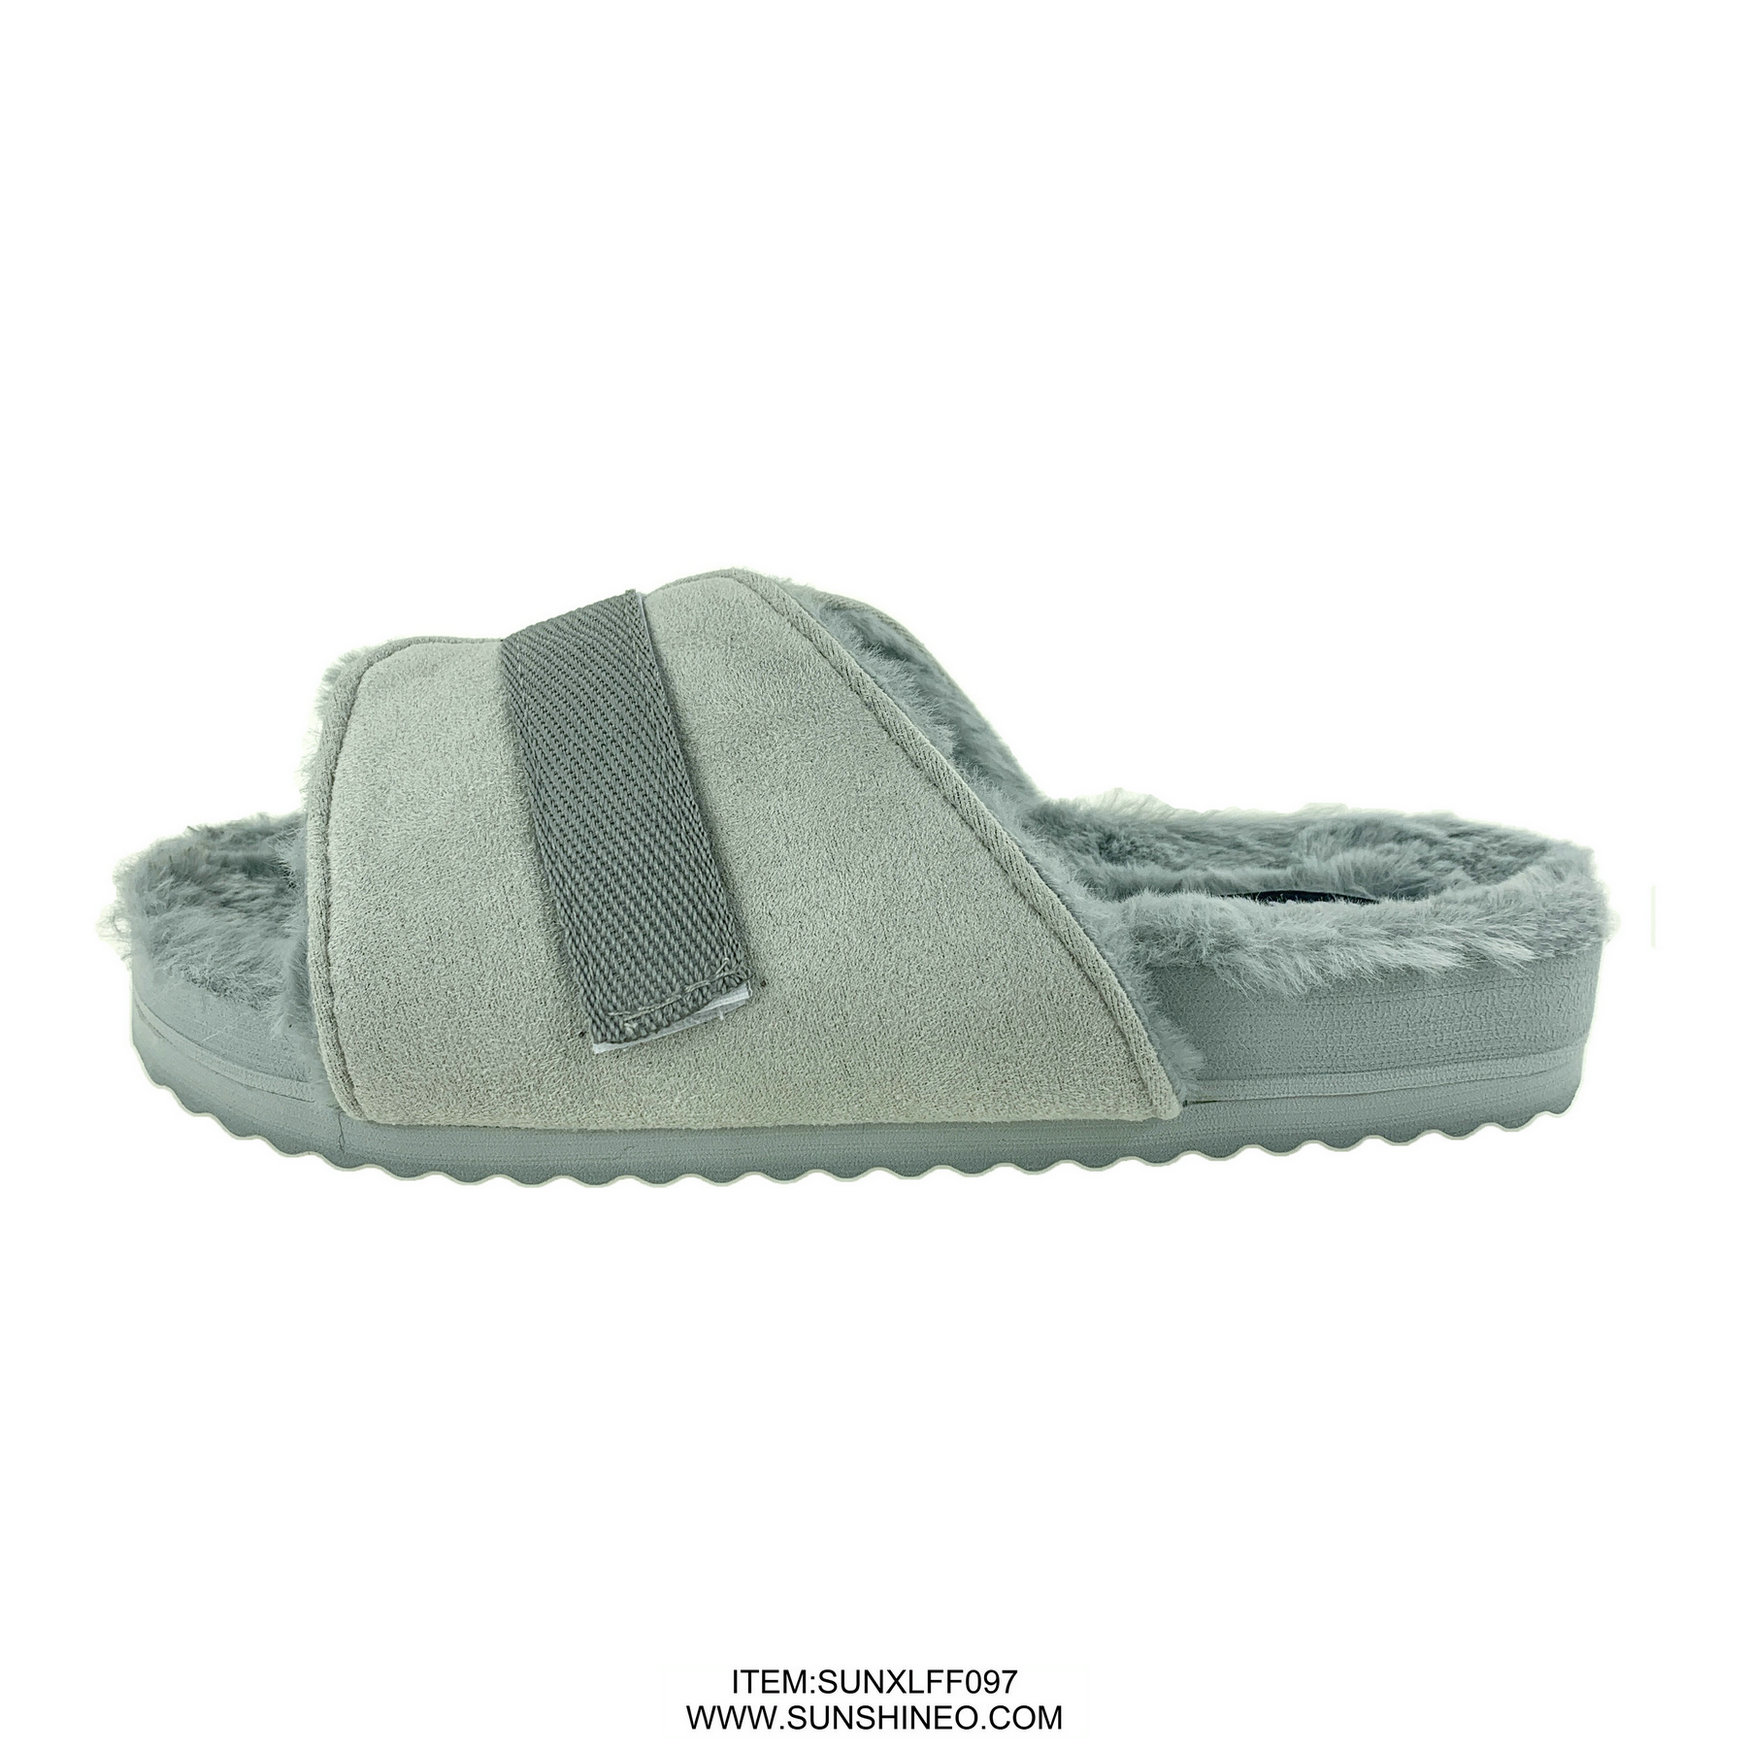 SUNXLFF097 fur flip flop sandals winter slippers